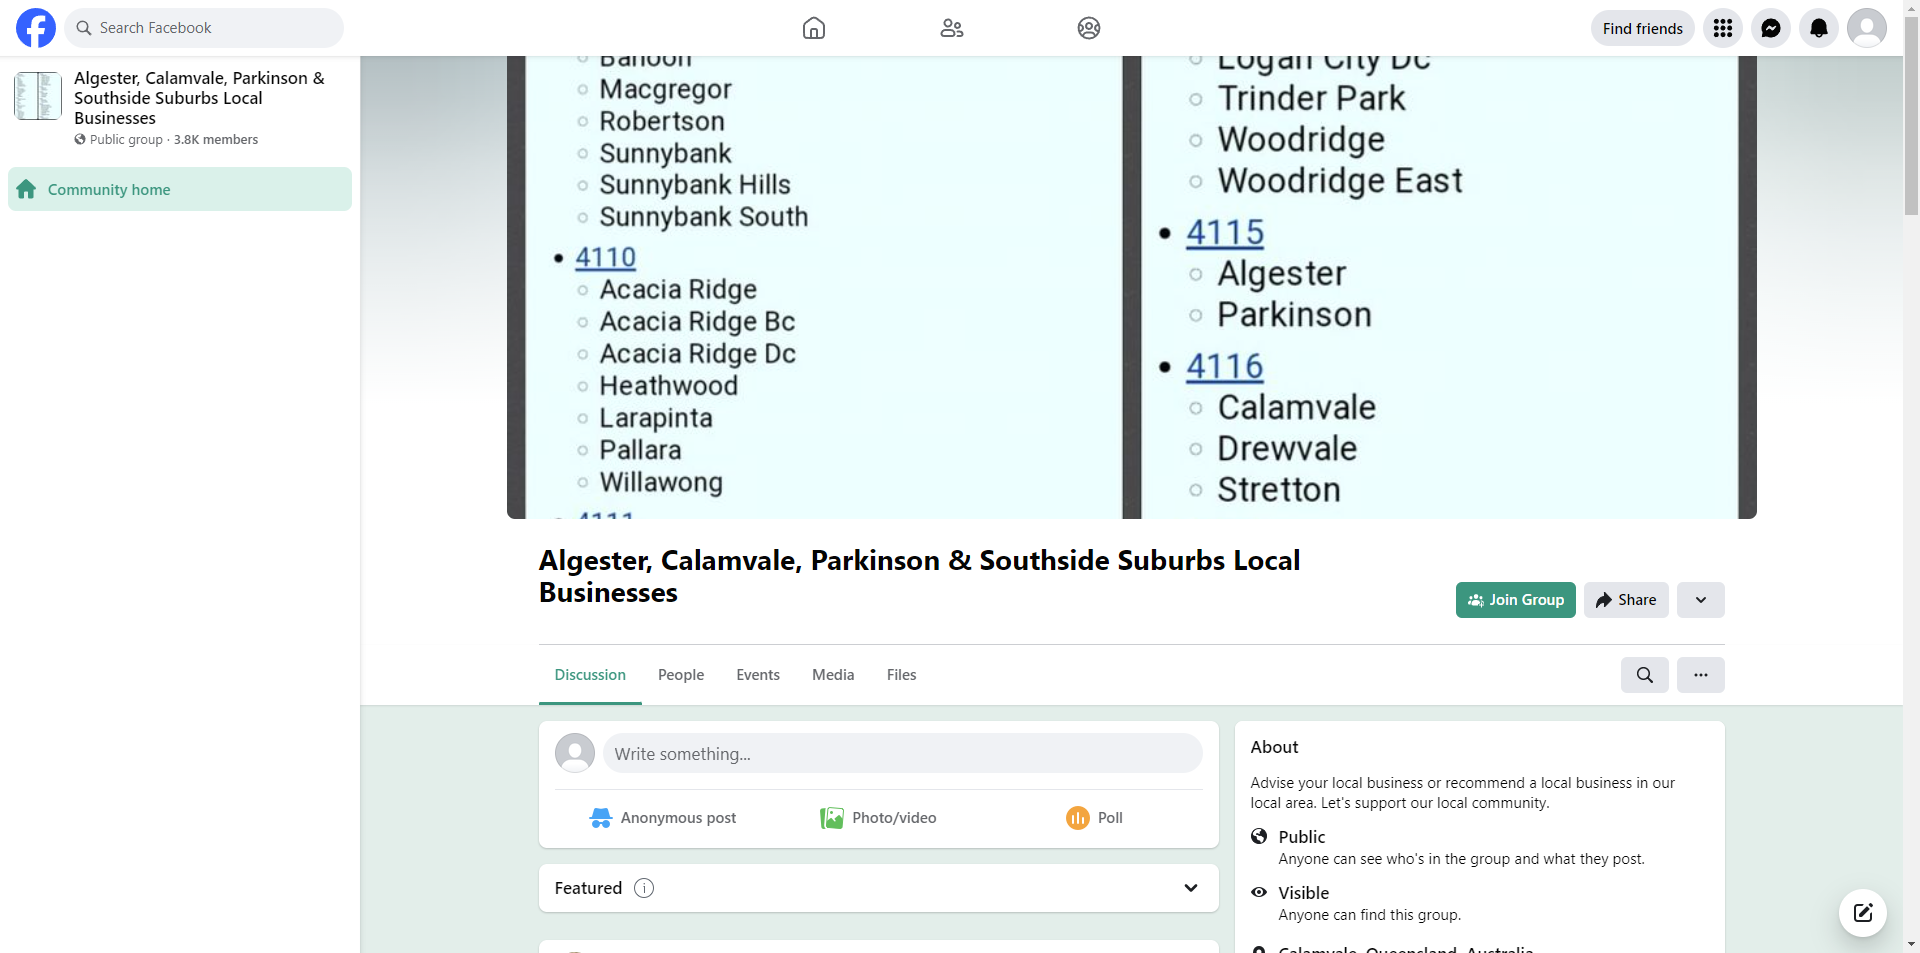 Algester, Calamvale, Parkinson & Southside Suburbs Local Businesses